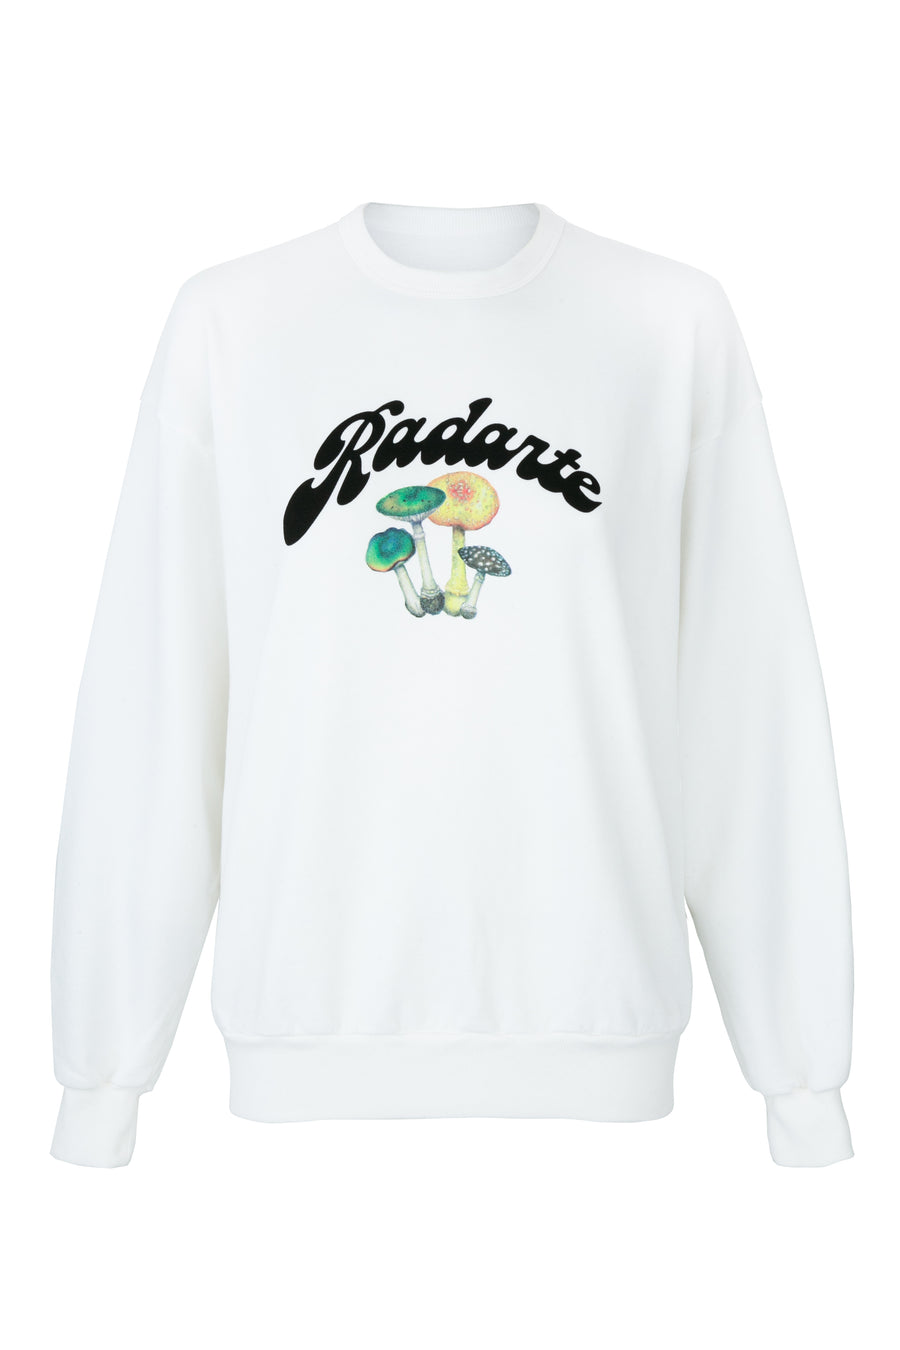 White Mushroom Print Radarte Sweatshirt – Rodarte